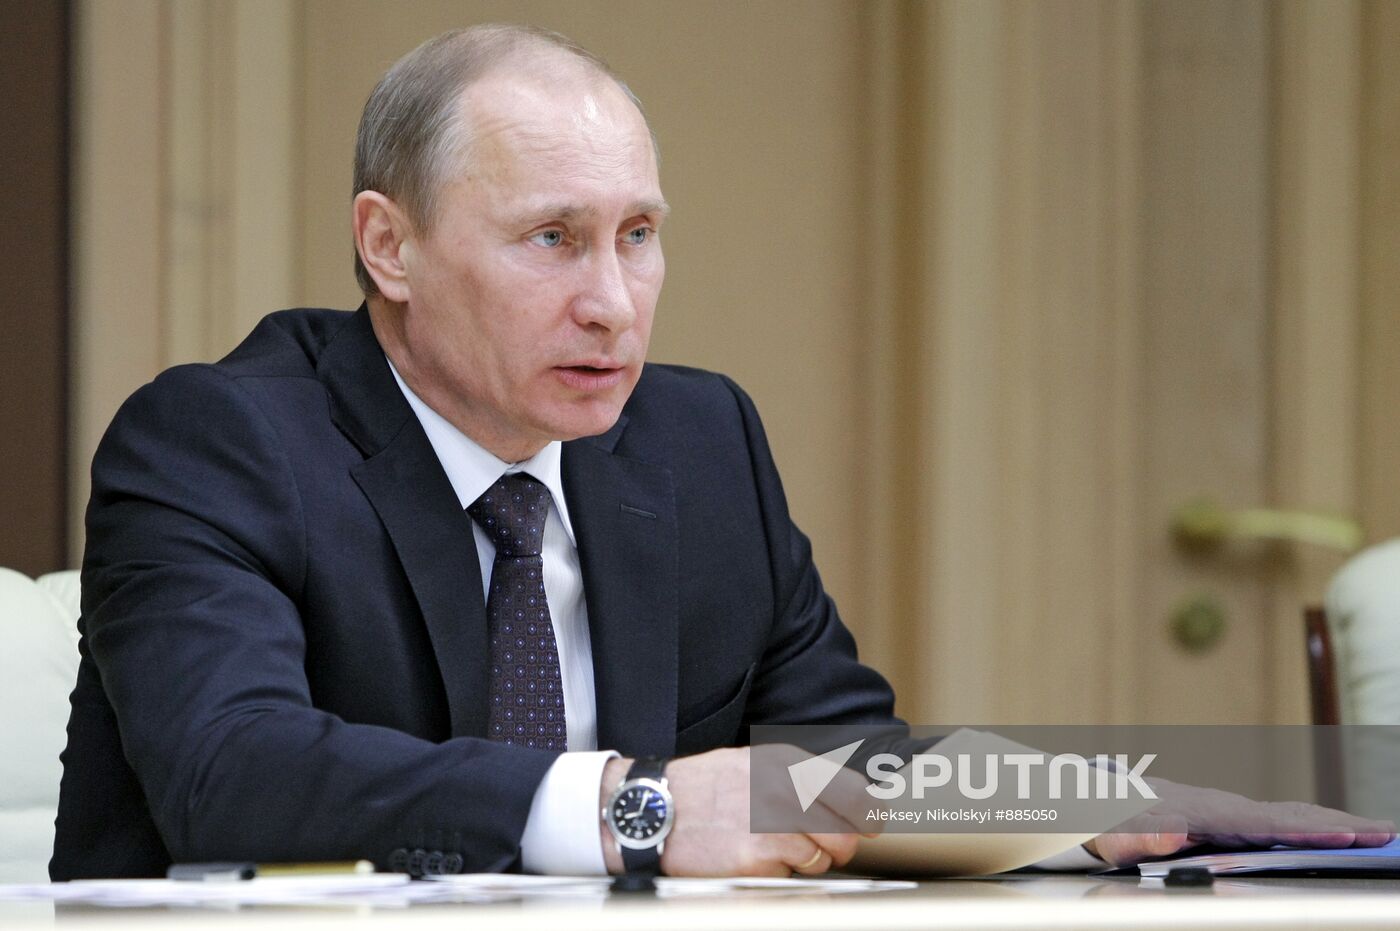 Vladimir Putin chairs teleconference